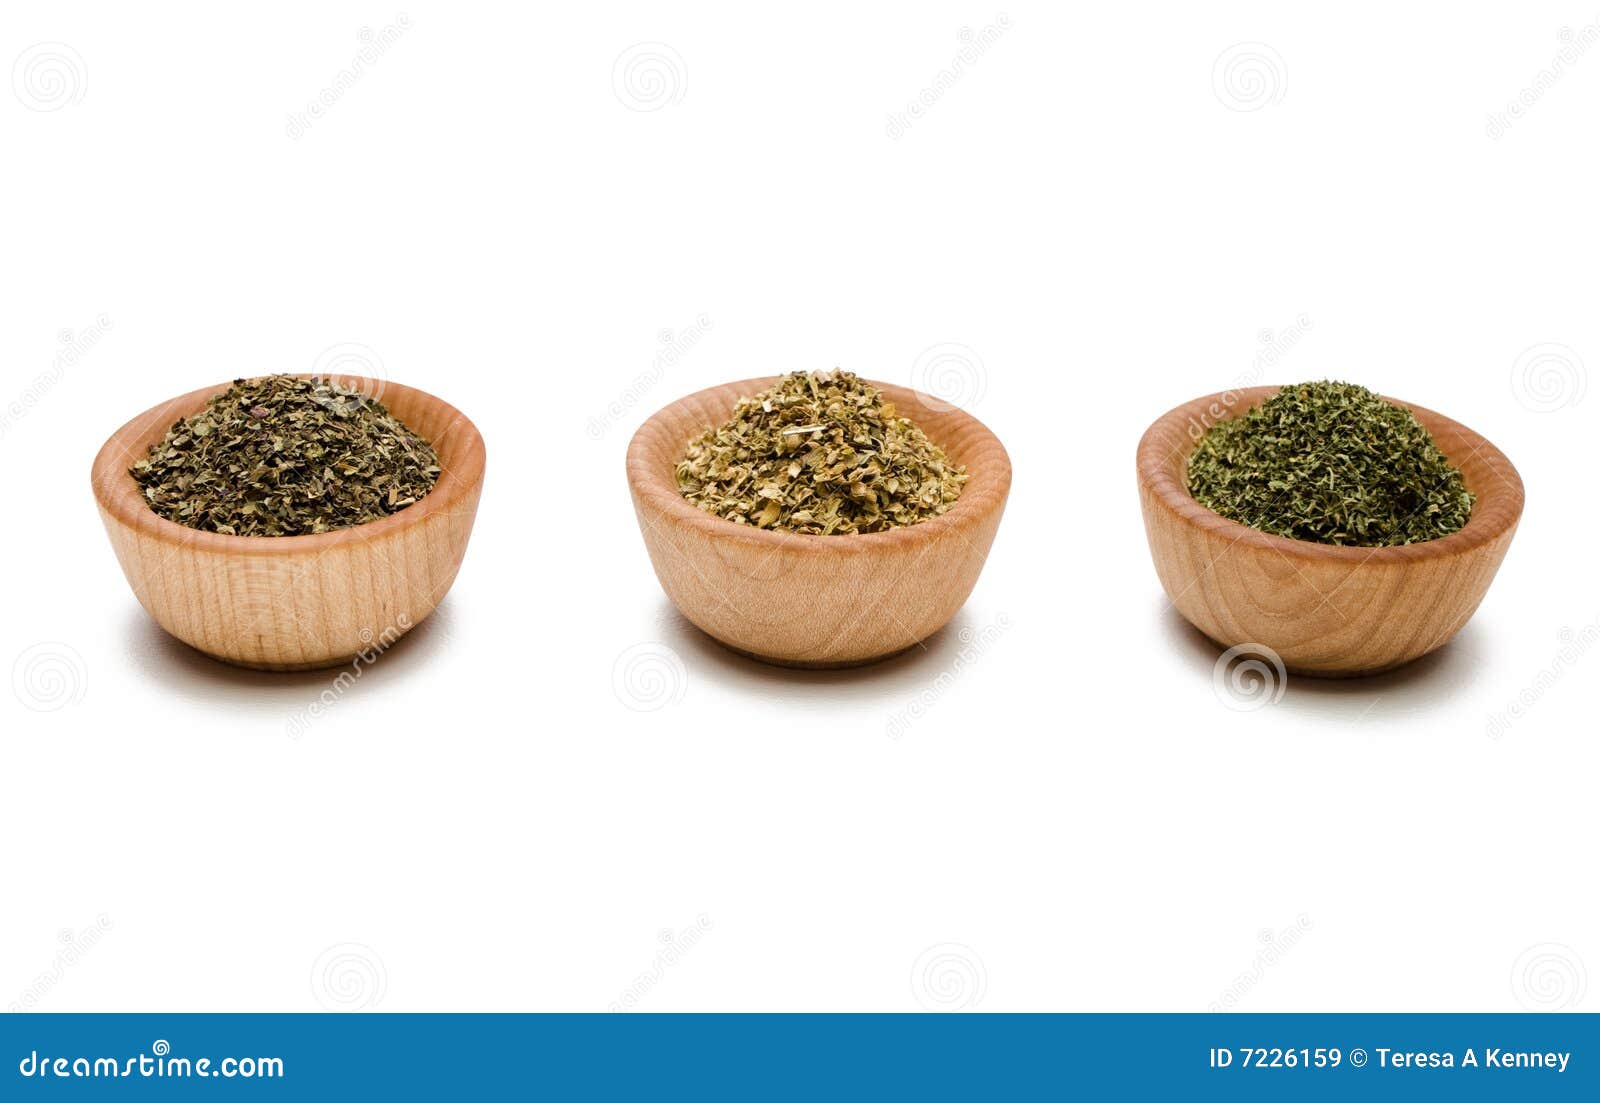 herbs in pinch bowls